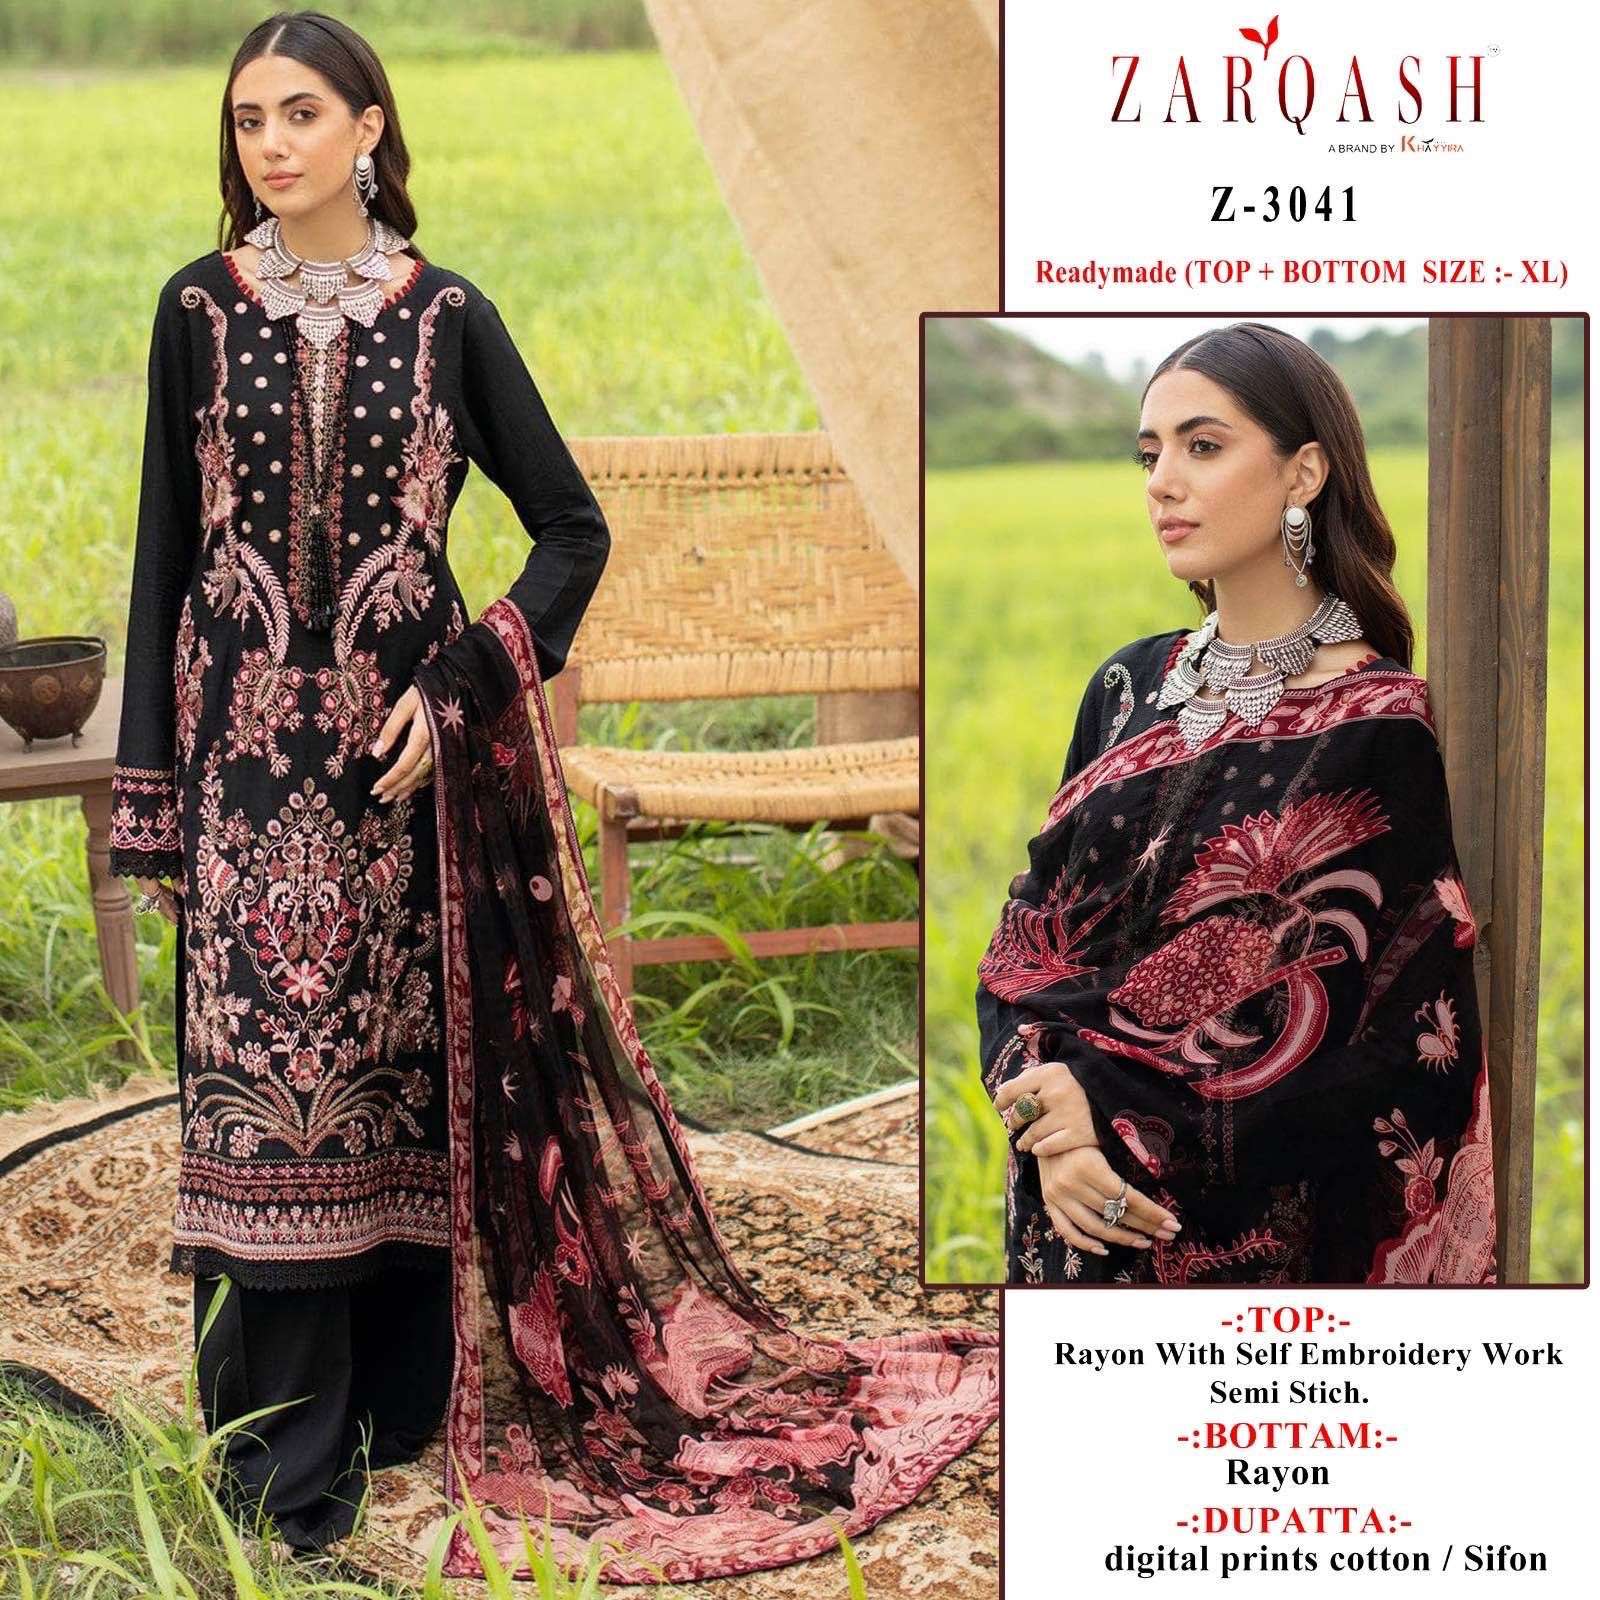 zarqash z-3041 designer rayon embroidery work suit 